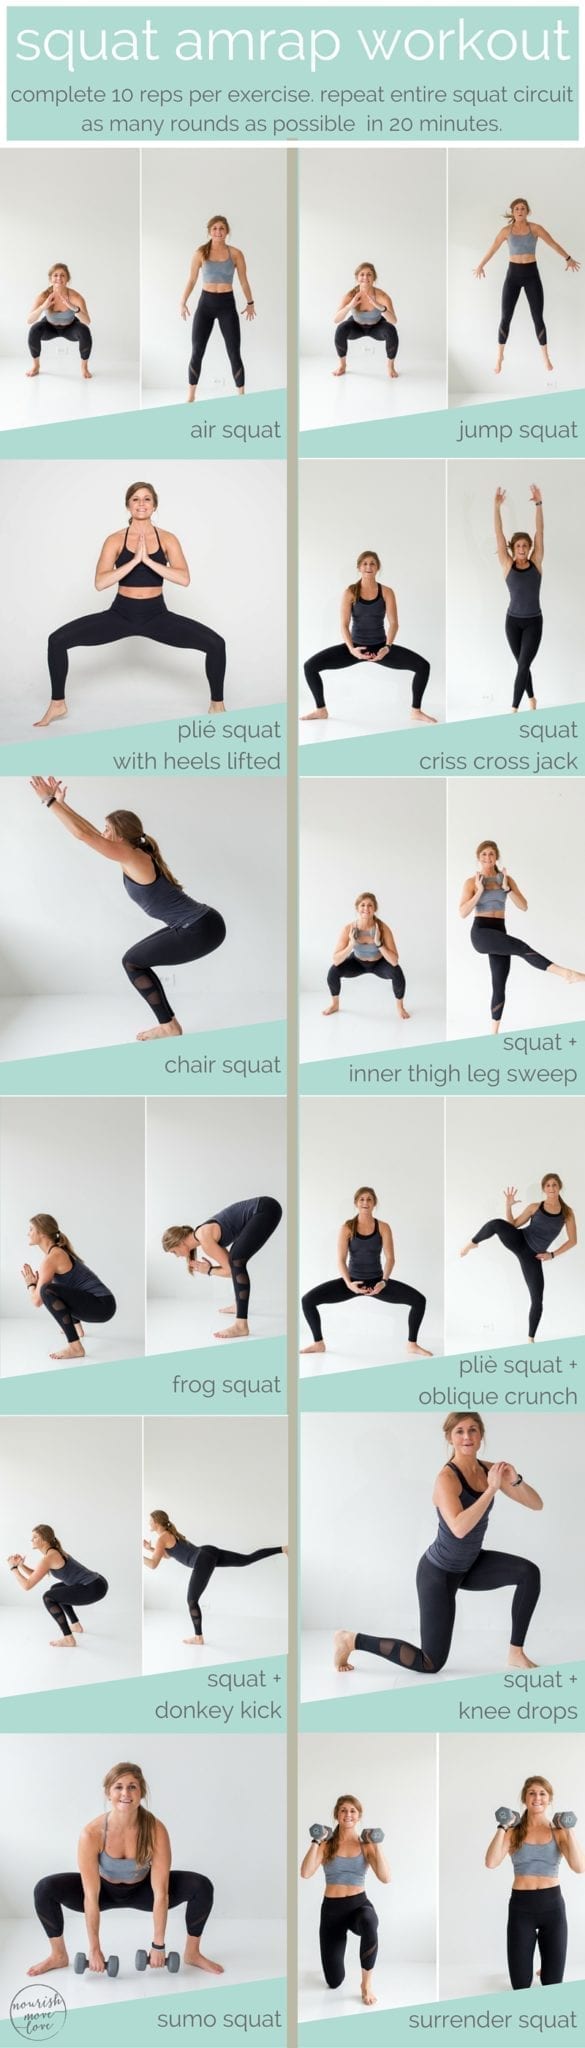 12 squat variations + lower body amrap workout | www.nourishmovelove.com